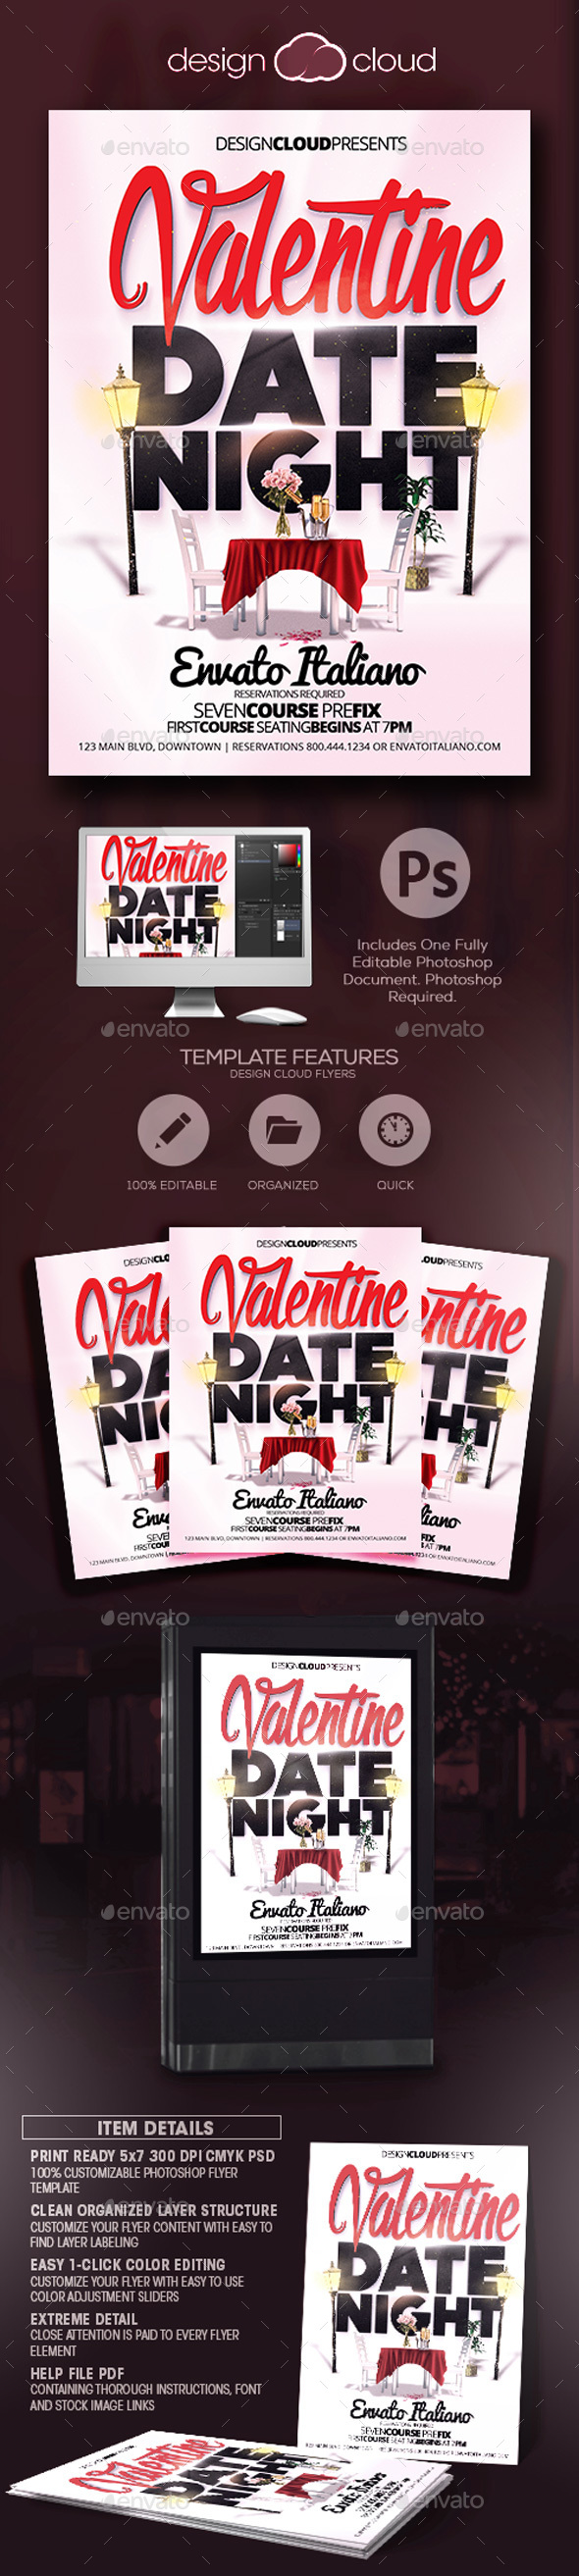 Valentine Date Night Flyer Template